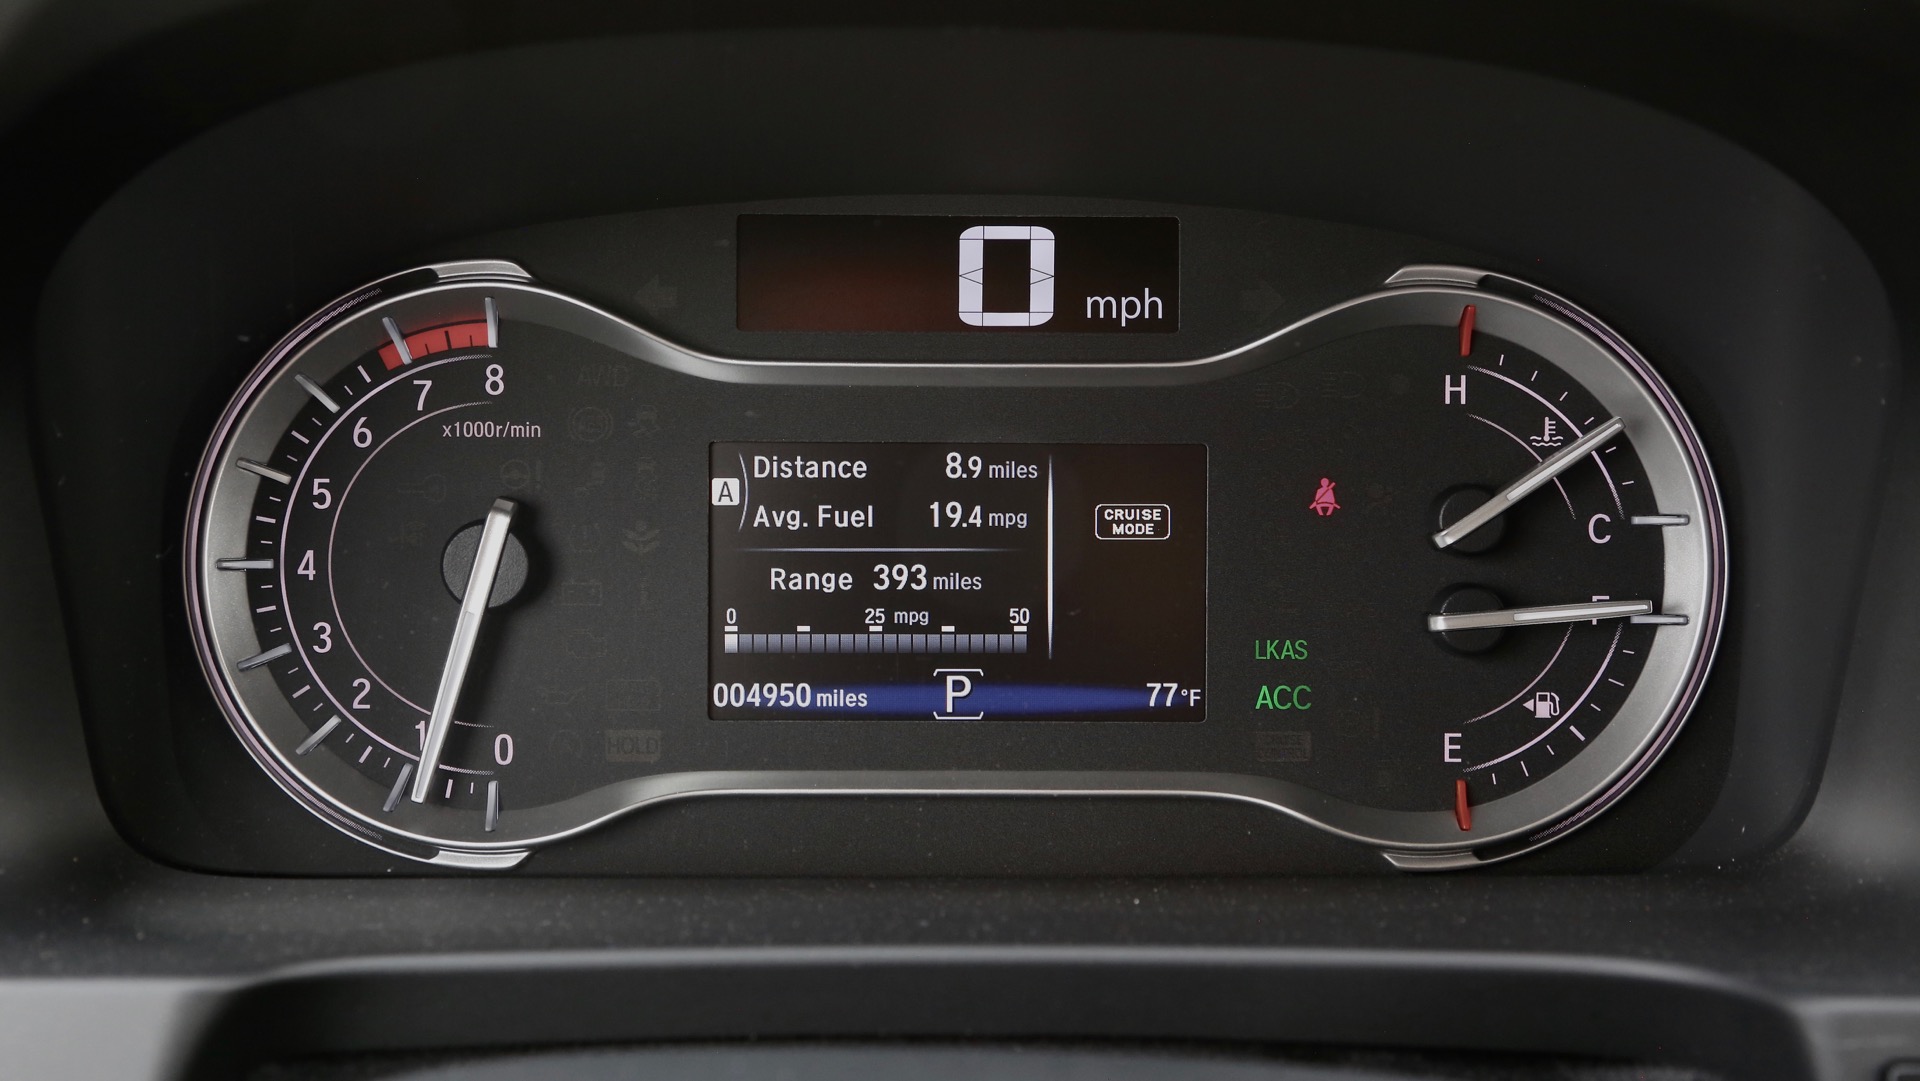 2016 Honda Pilot long-term road test: final fuel economy check-in1920 x 1081